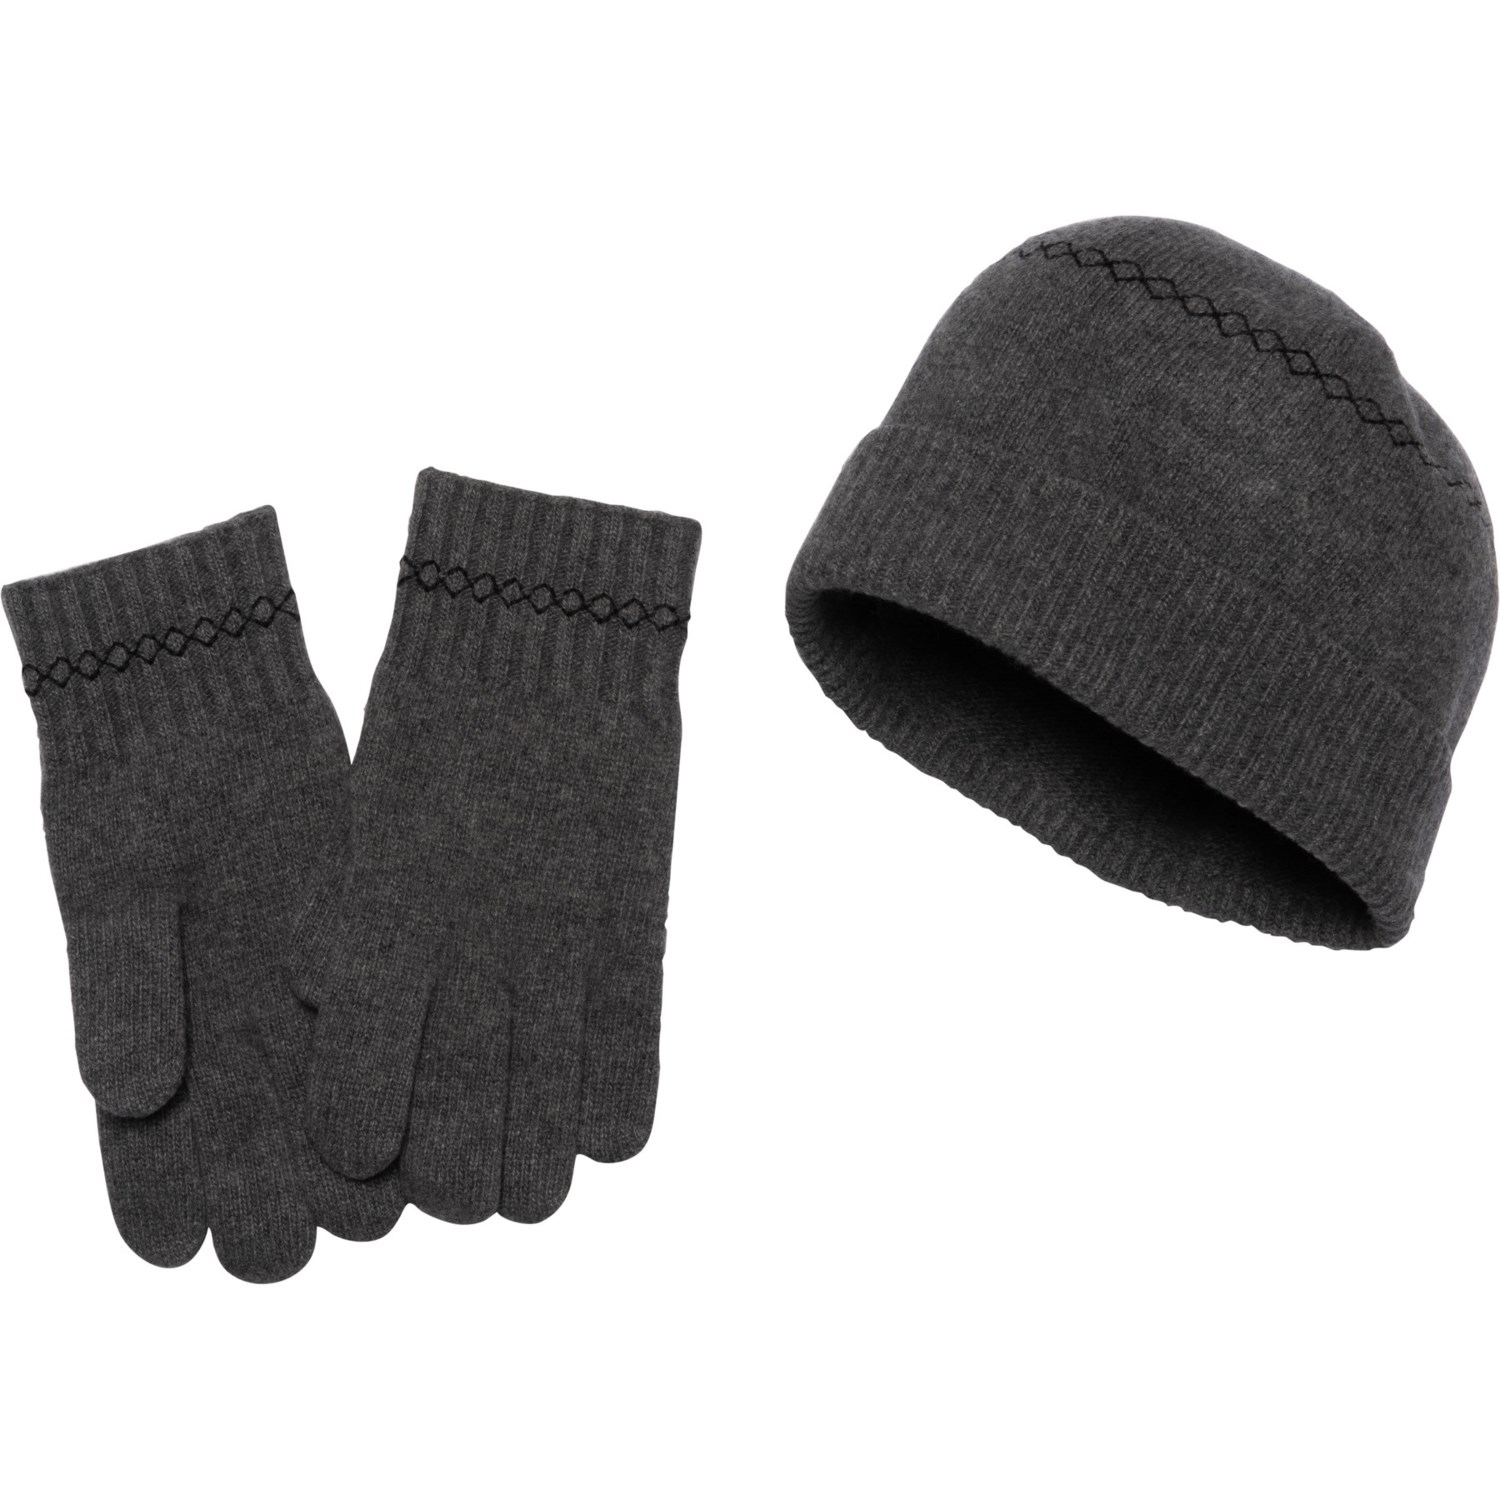 ugg hat and glove set